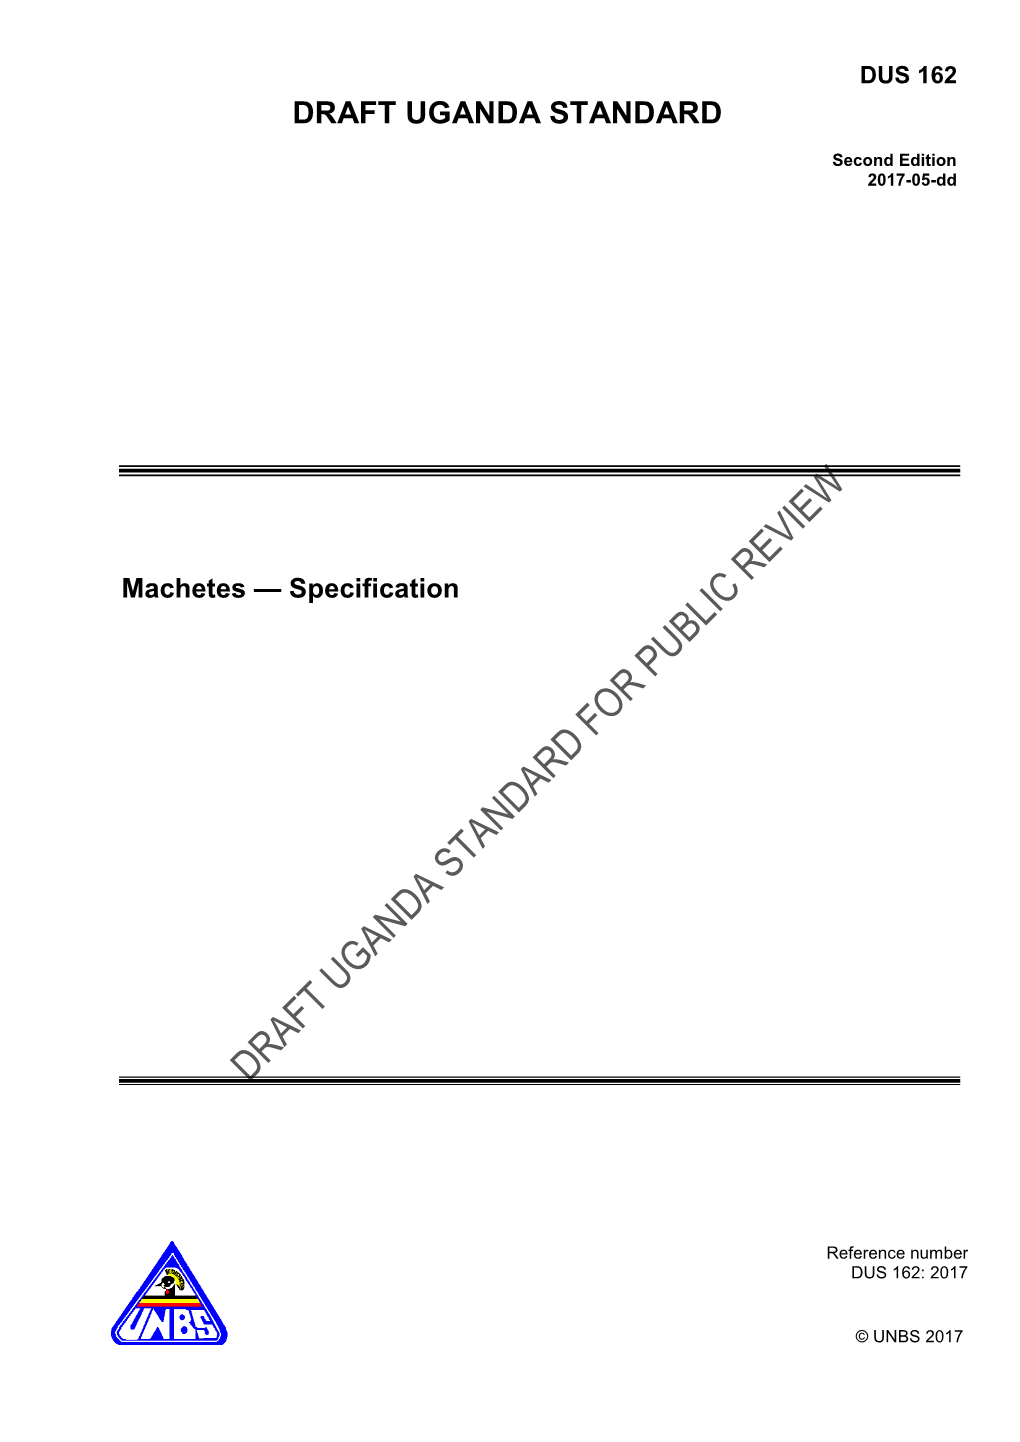 Machetes — Specification